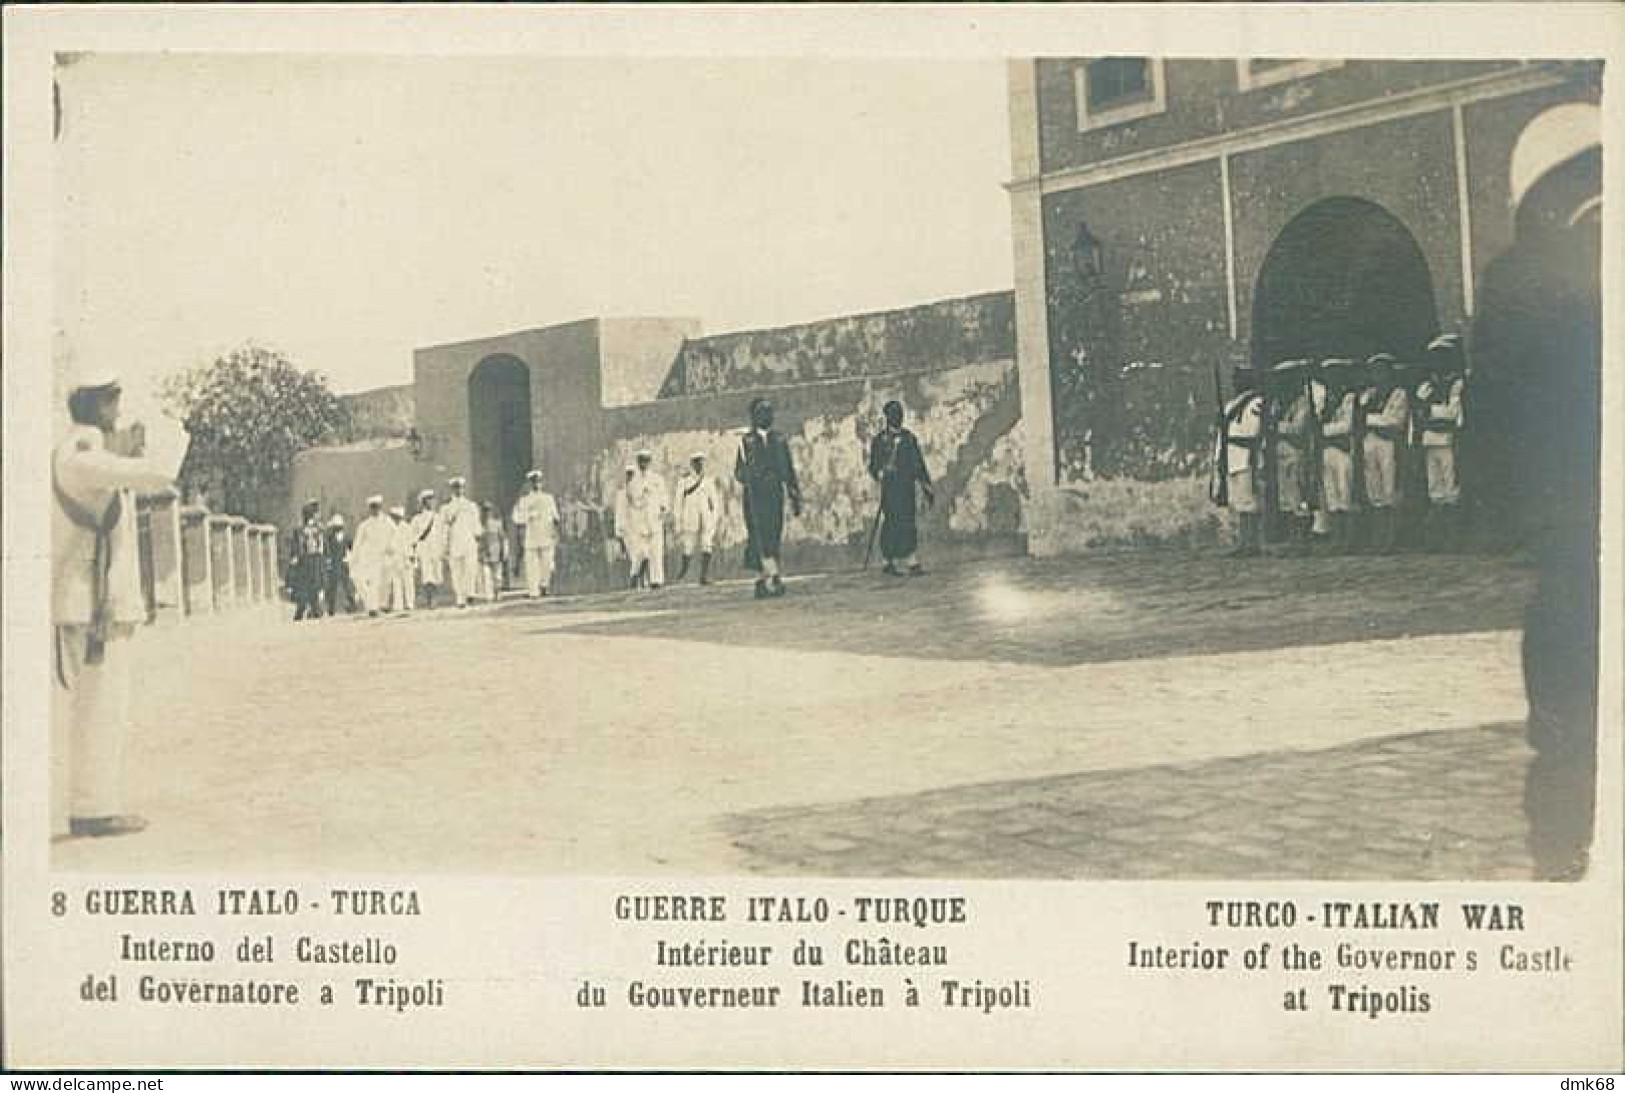 LIBYA / LIBIA - TURKEY / ITALY WAR - INTERIOR OF THE GOVERNOR'S CASTLE AT TRIPOLI - RPPC POSTCARD 1910s (12596) - Libië